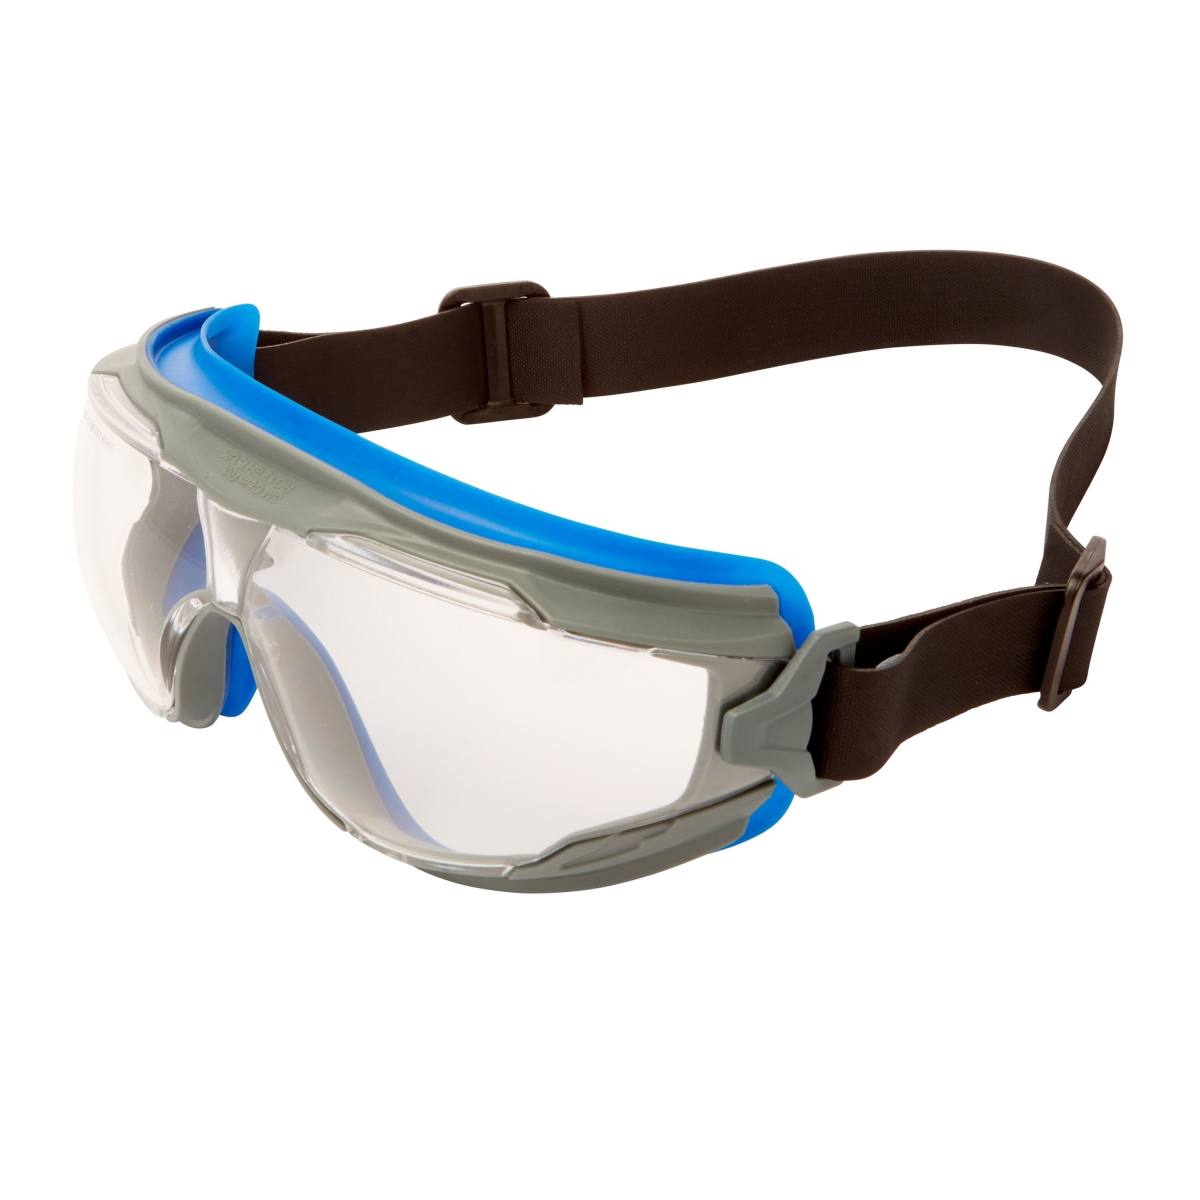 3M GoggleGear 500 full-vision goggles GG501NSGAF-BLU, autoclavable, blue-grey frame, black neoprene headband, clear lenses